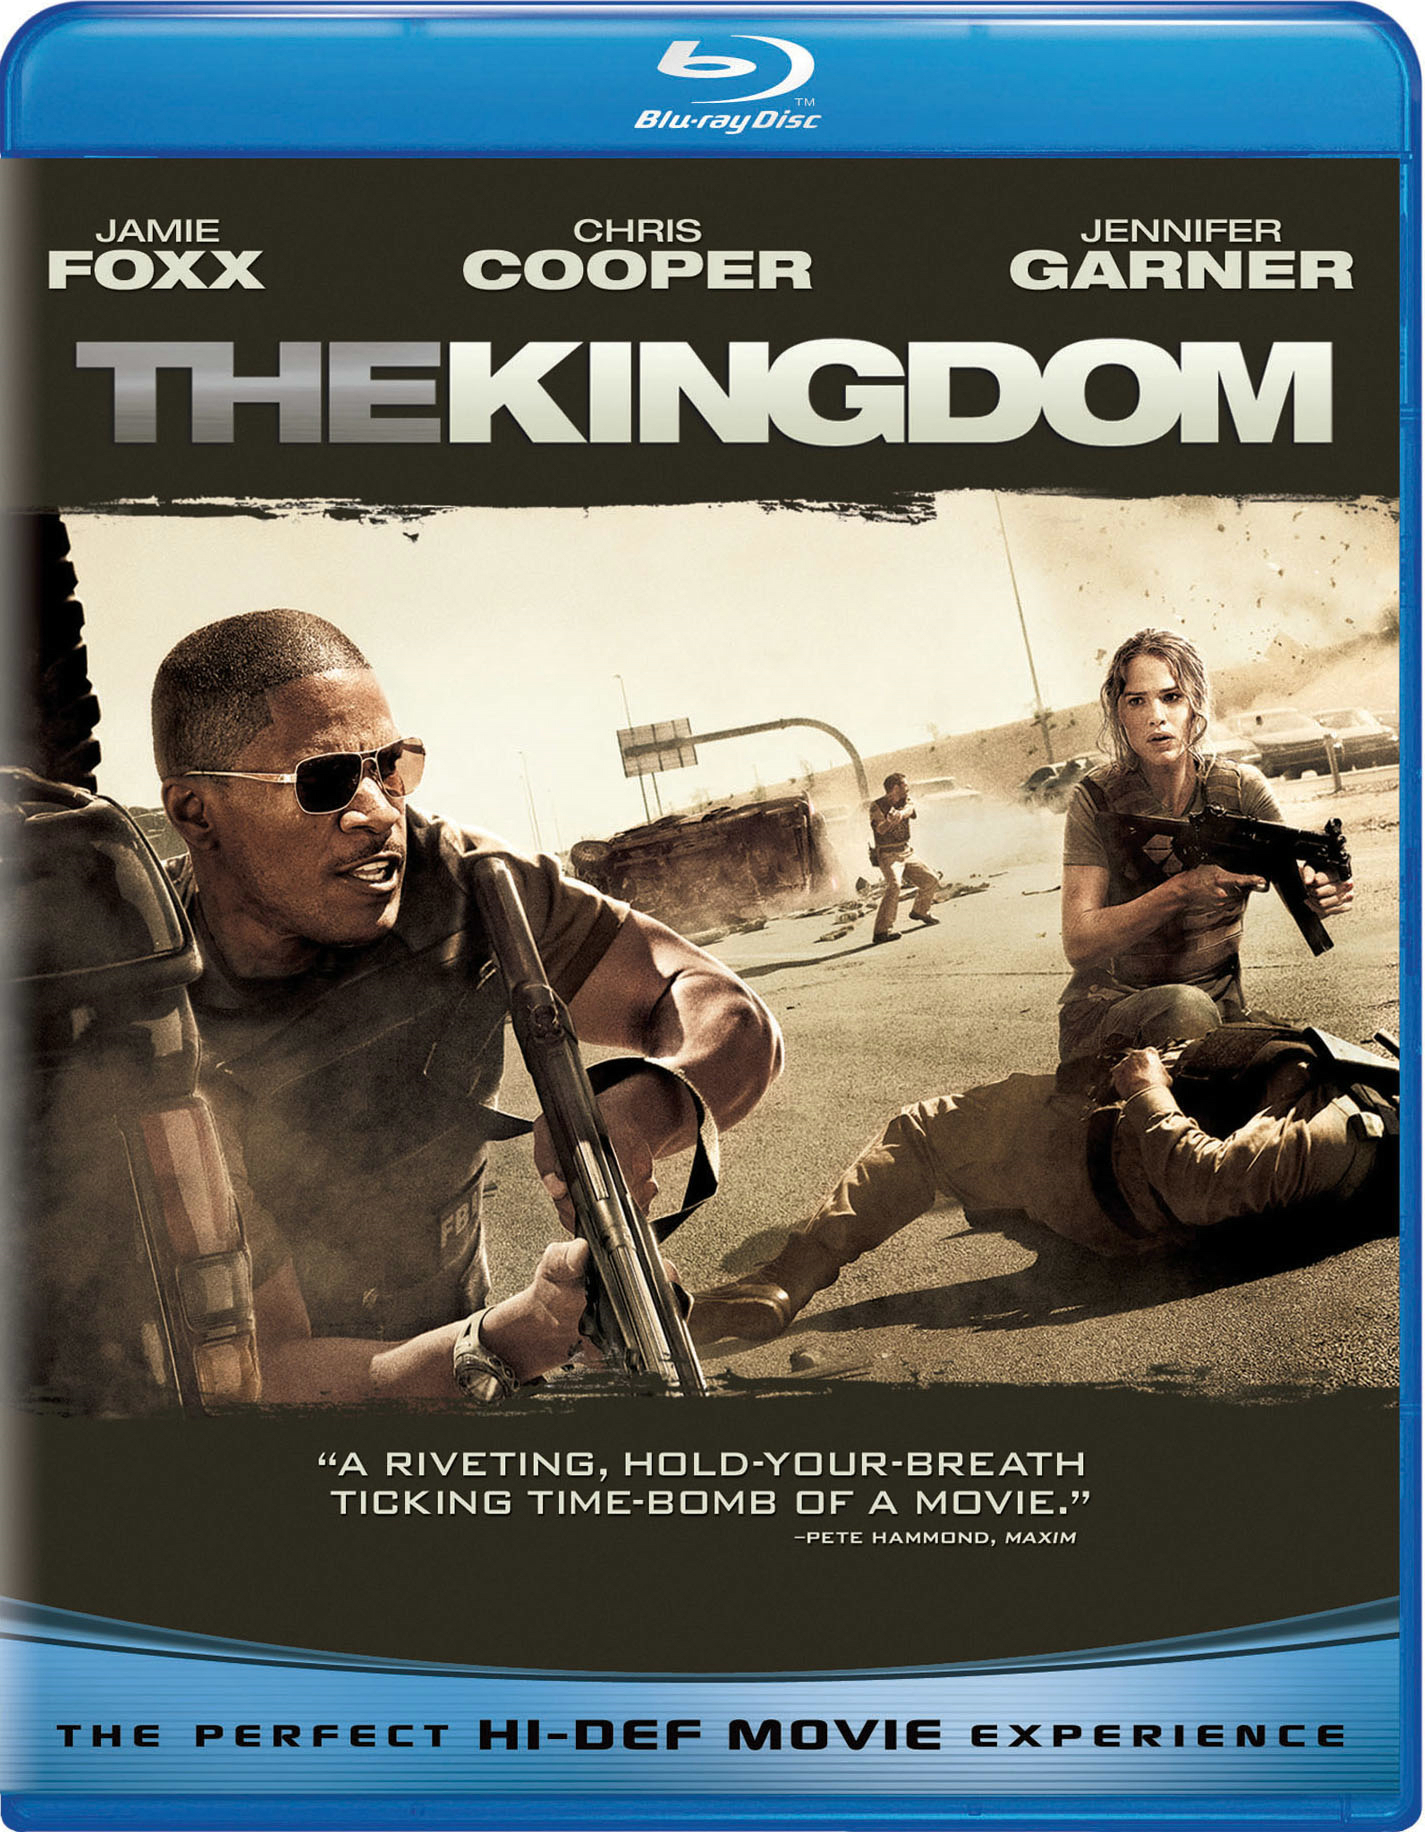 The Kingdom - Blu-ray [ 2007 ]  - Thriller Movies On Blu-ray - Movies On GRUV